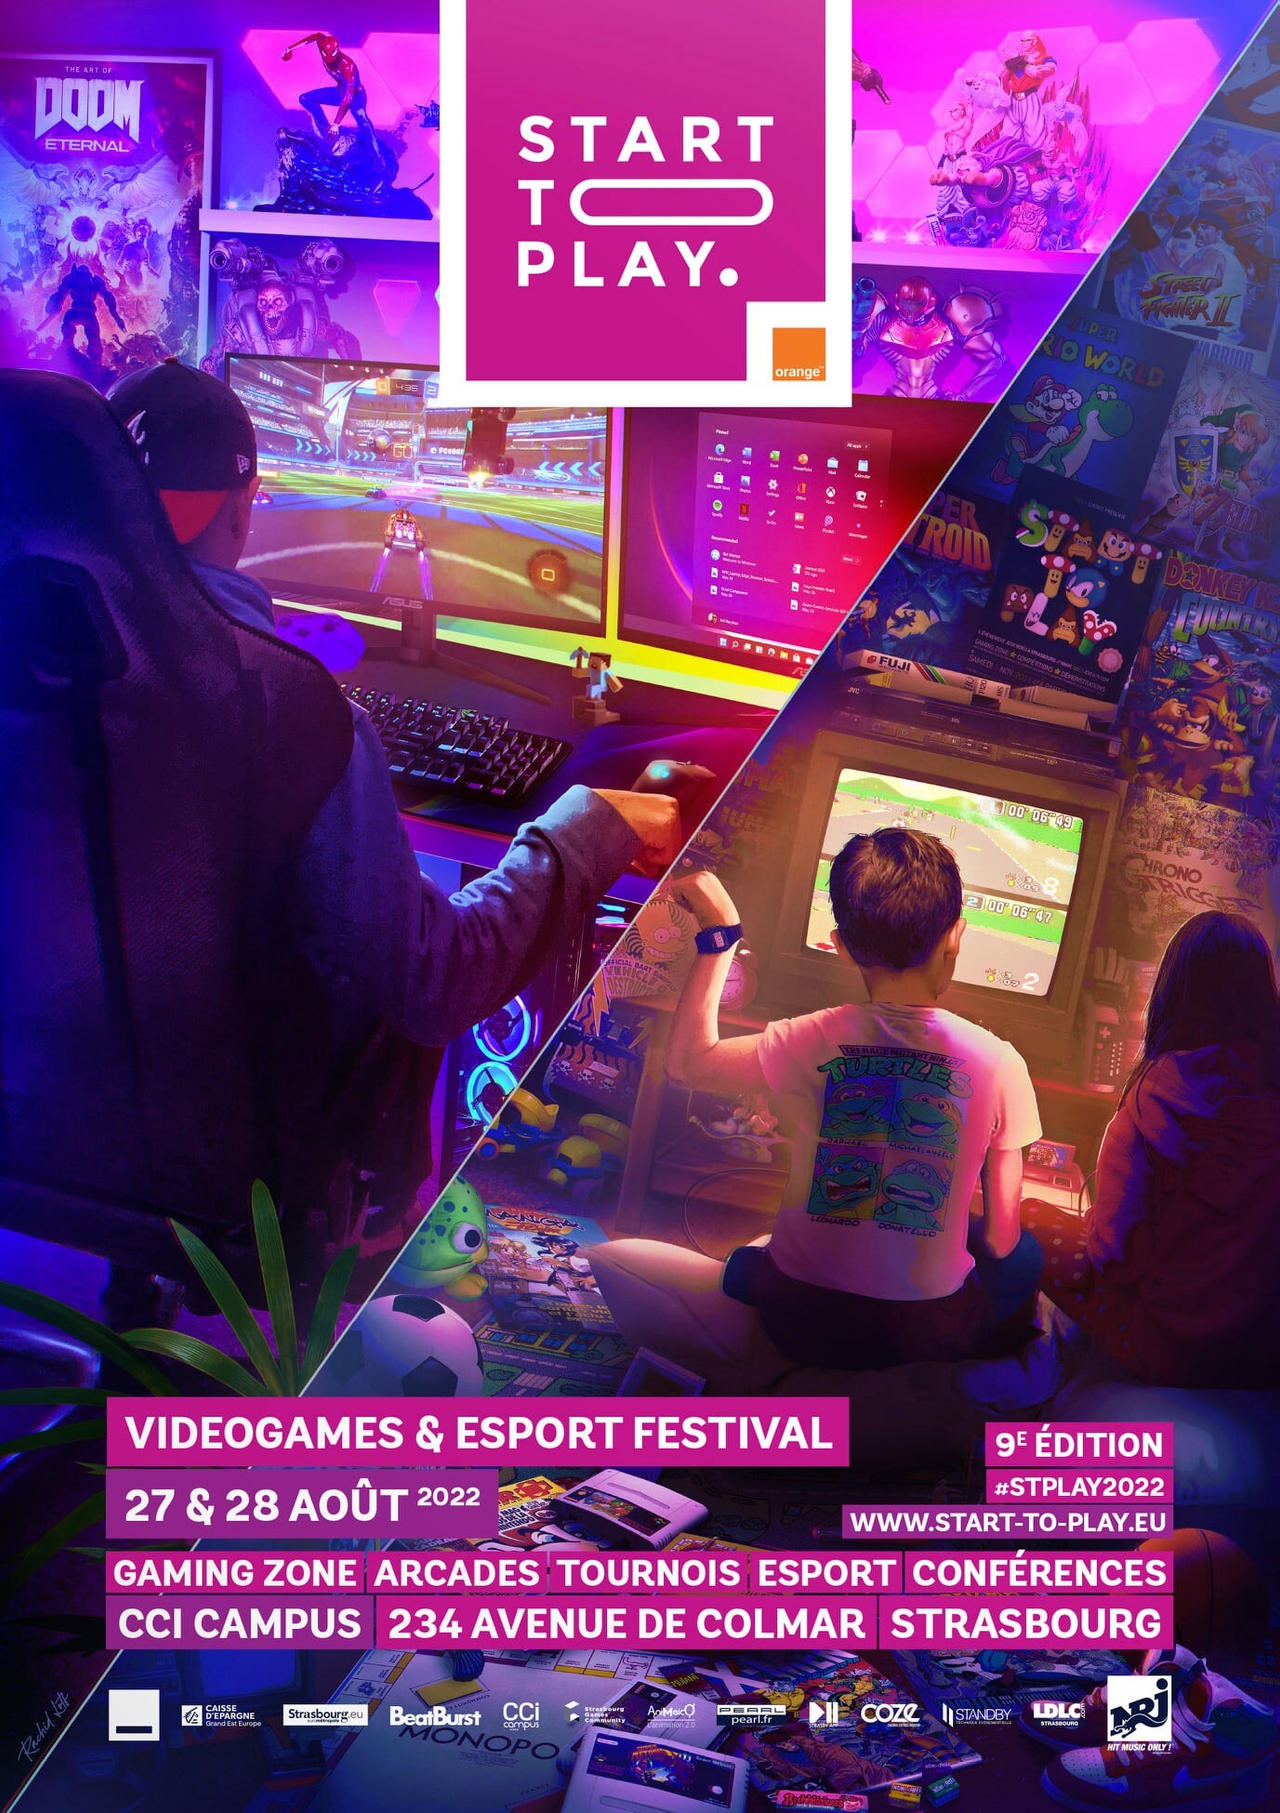 Start to Play 2022 - Videogames ESport Festival by RachidLotf on DeviantArt